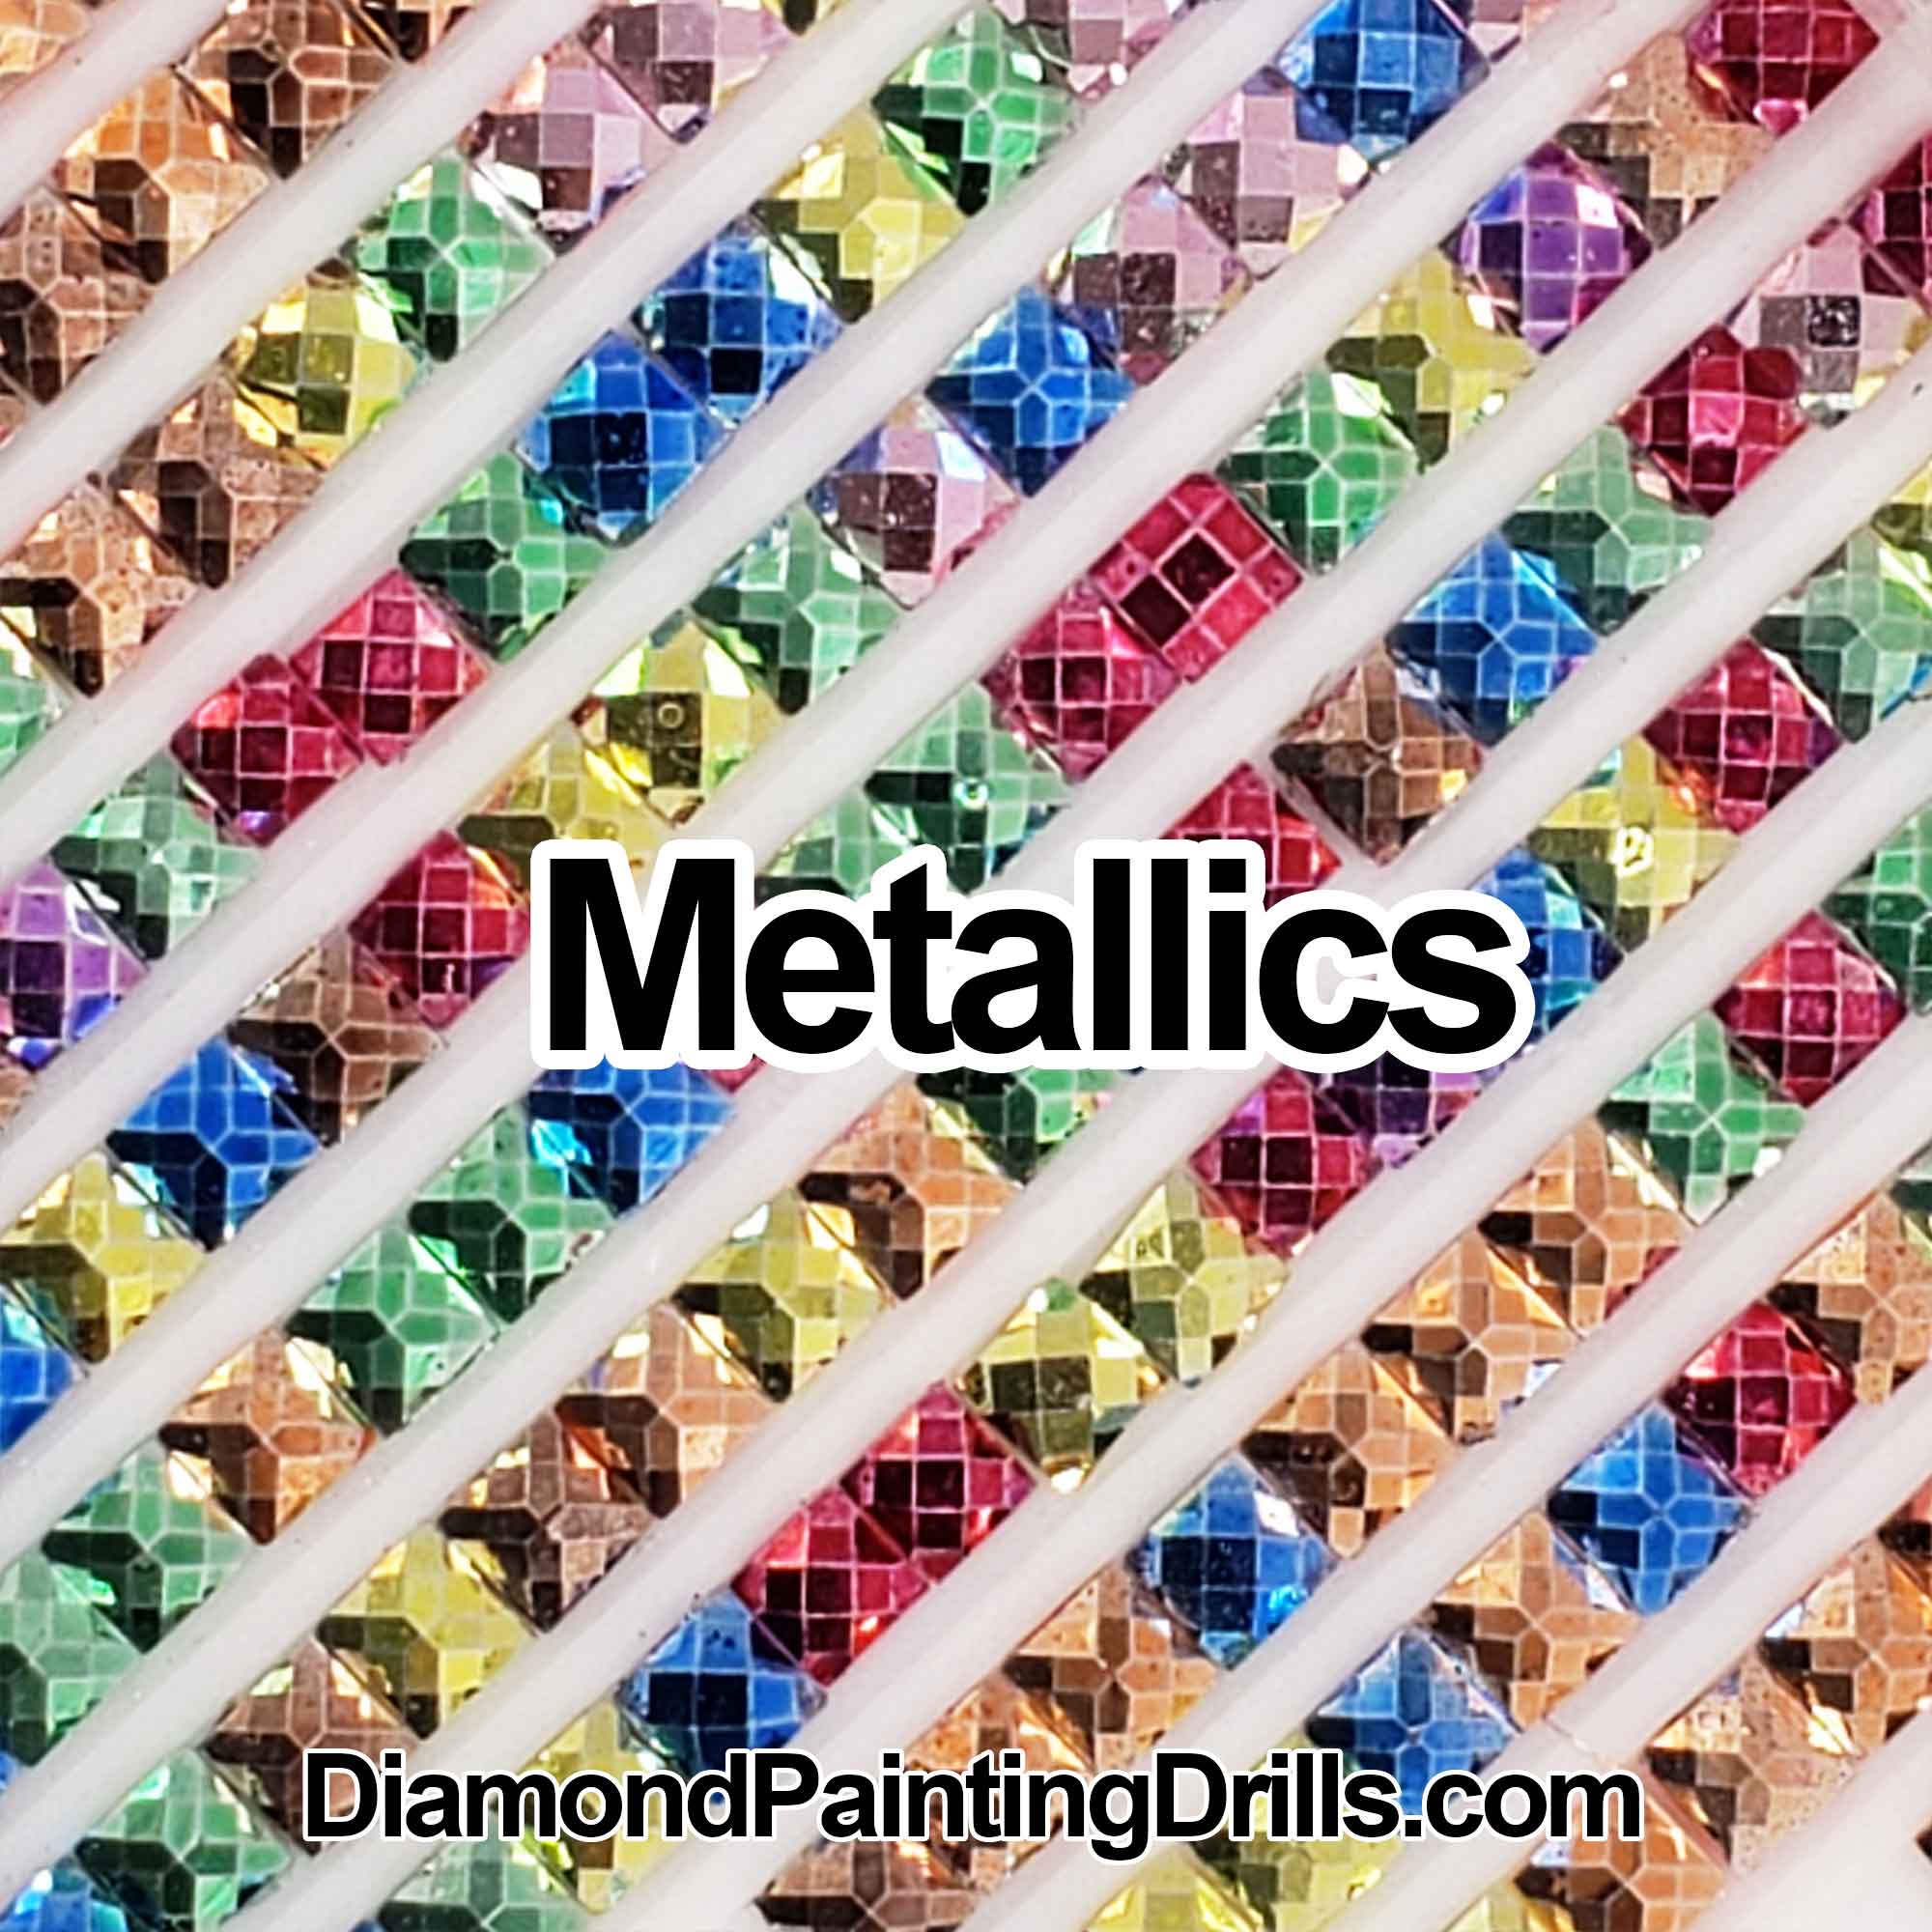 Green Metallic Drills - Square - Diamond Painting Drills